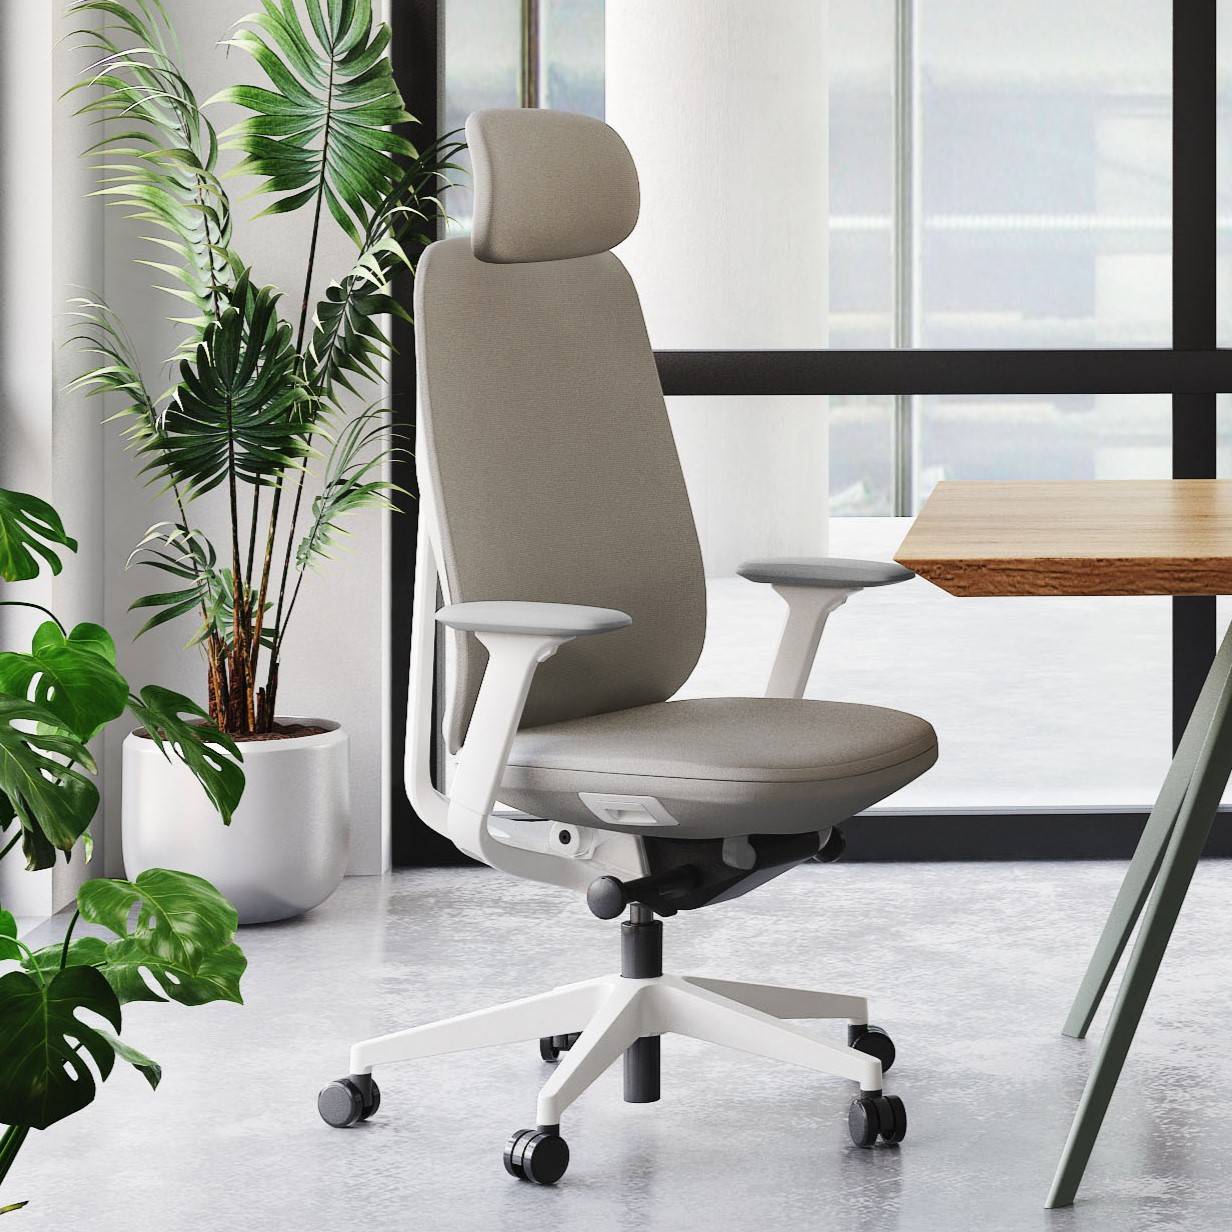 Cloud premium office chair